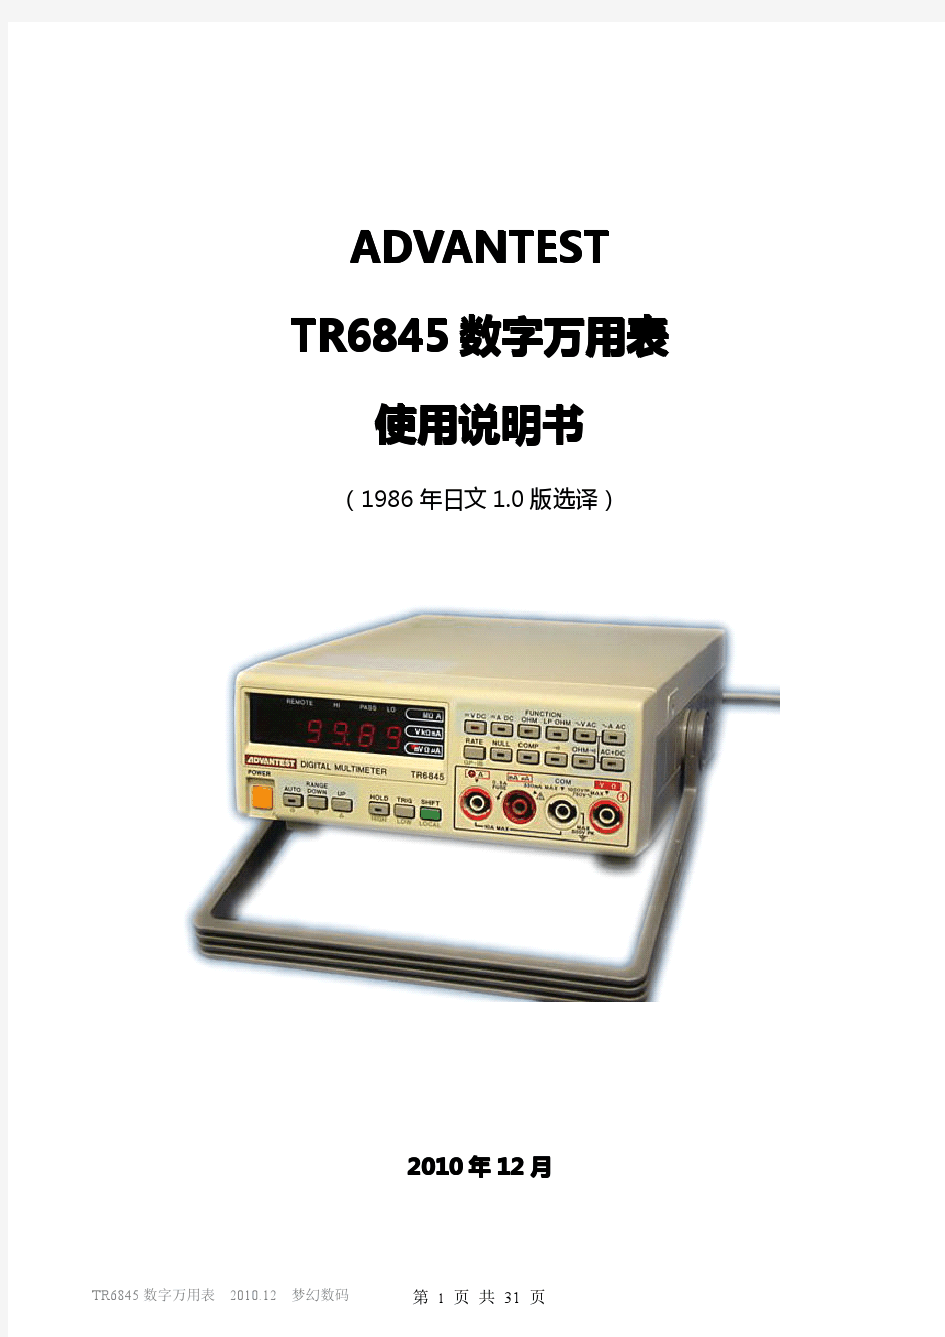 ADVANTEST TR6845台式数字万用表 中文说明书